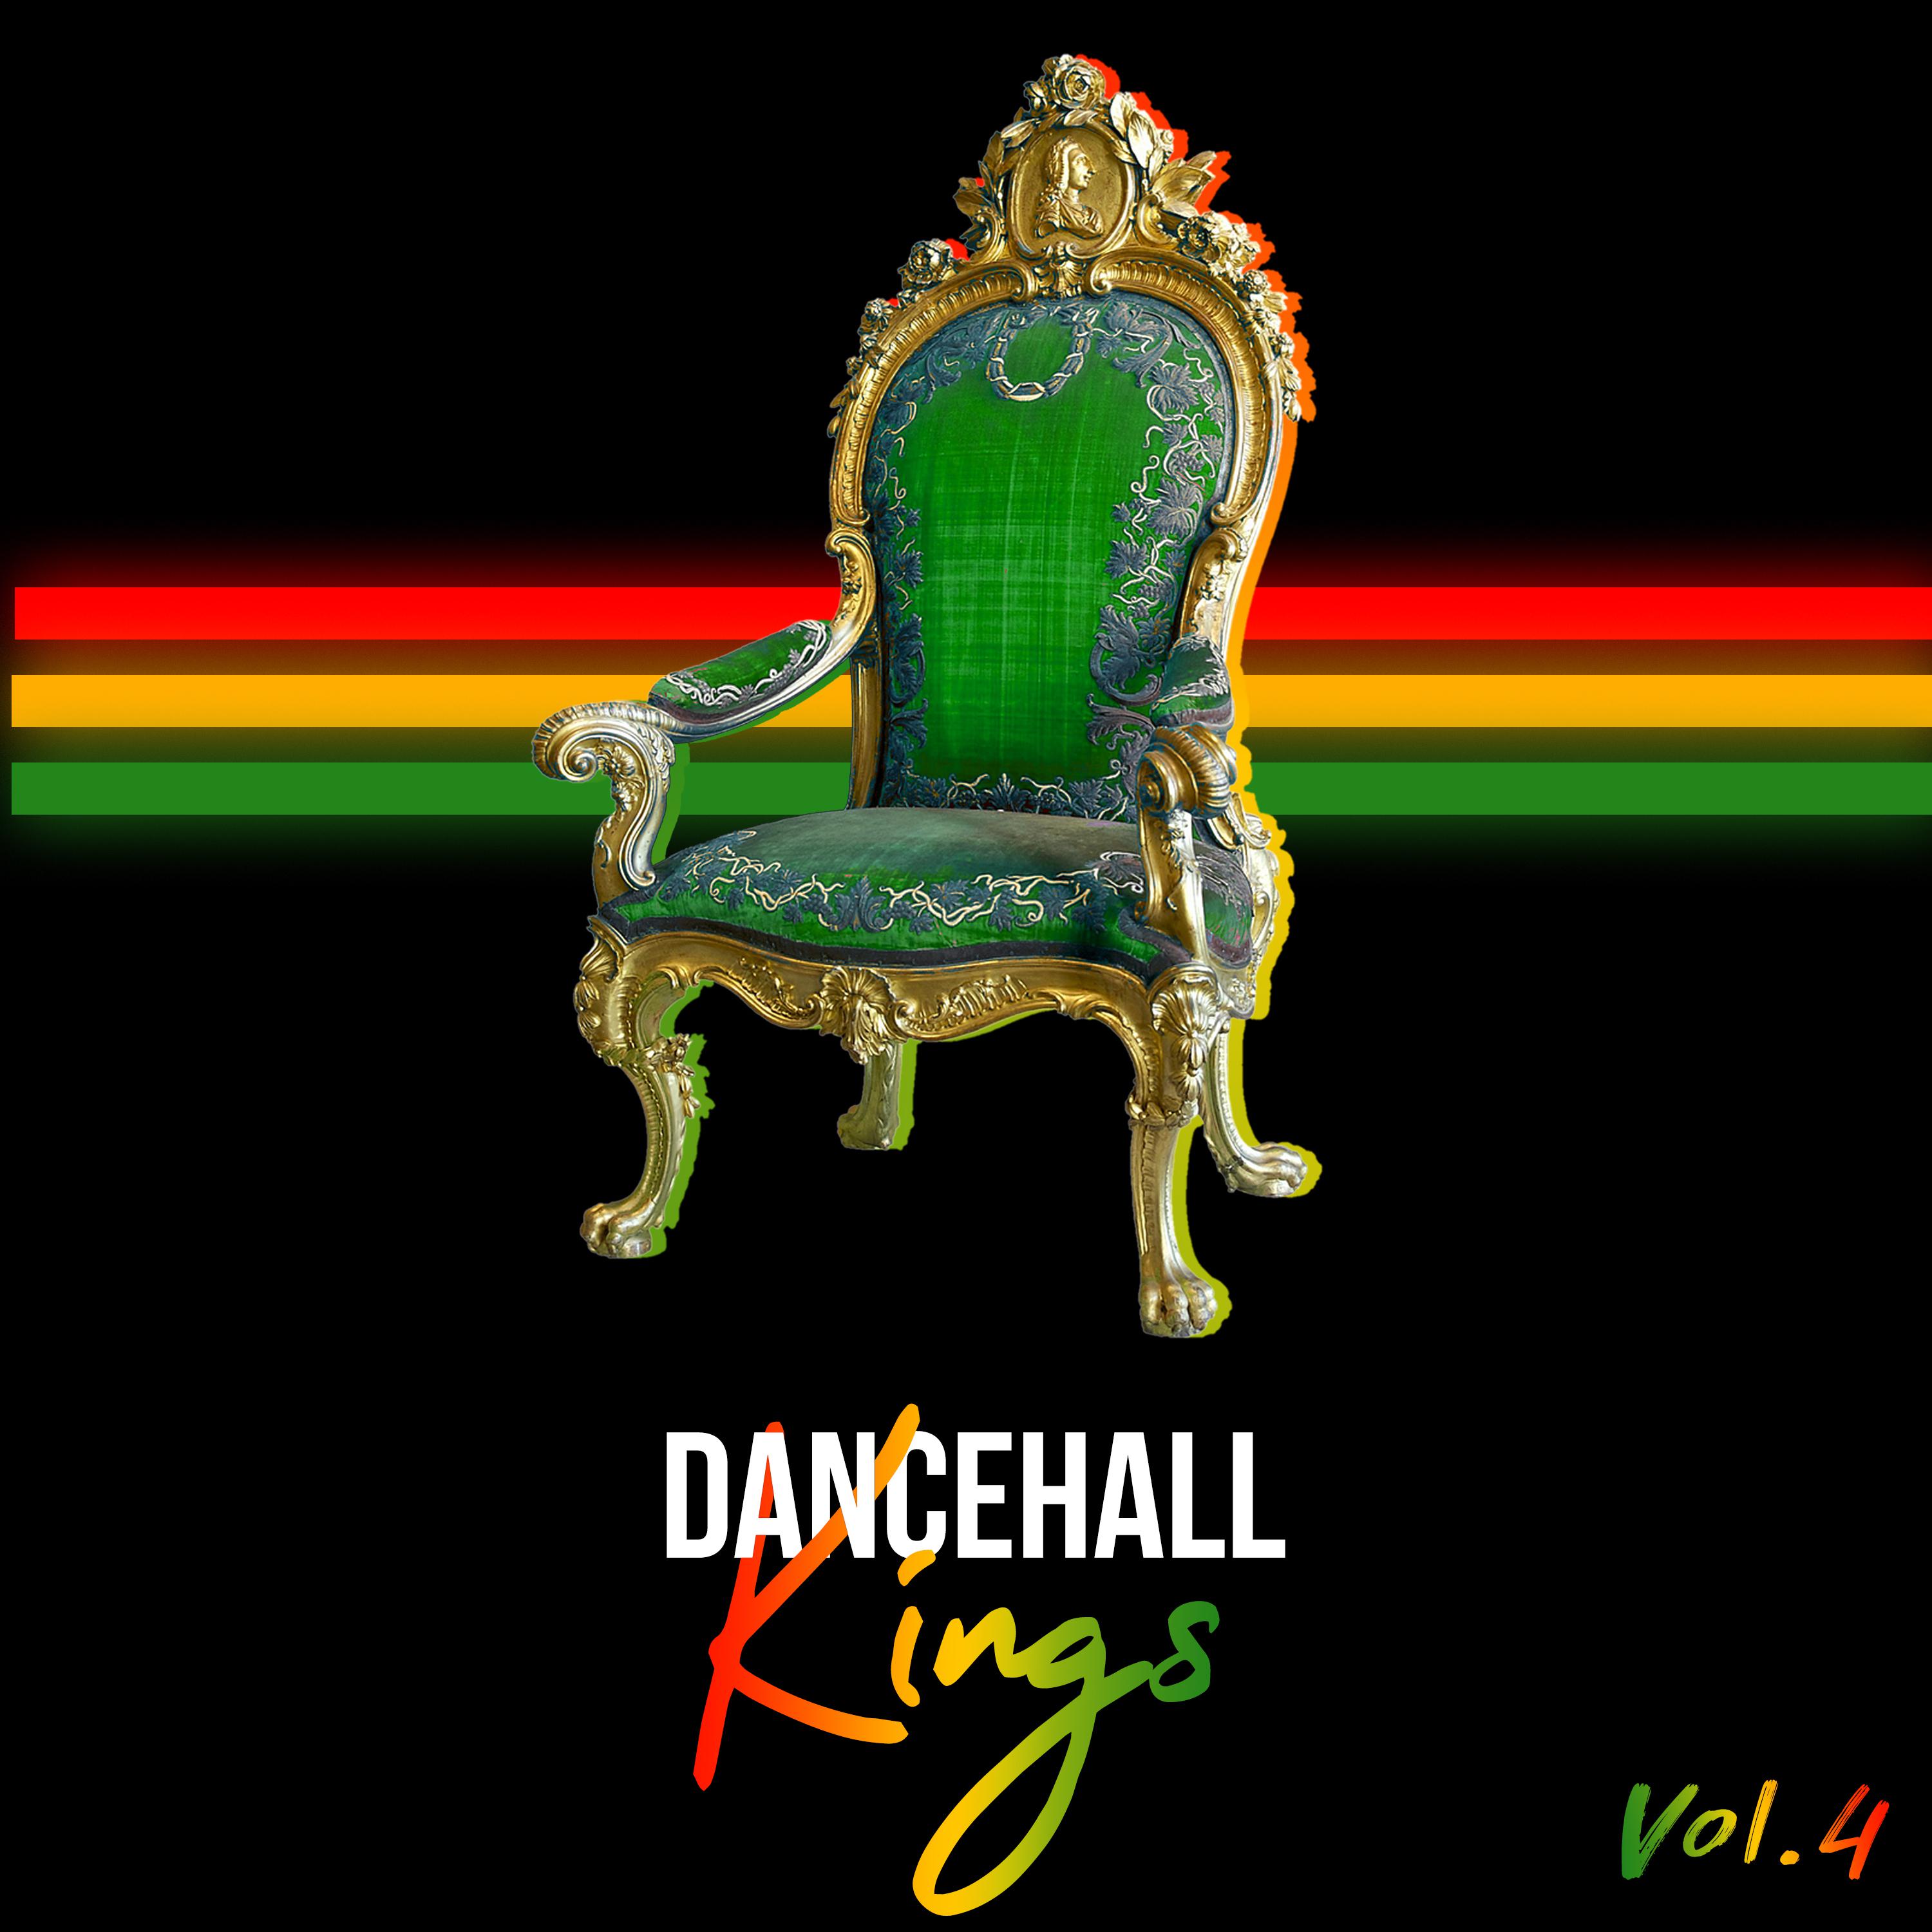 Dancehall Kings, Vol. 4